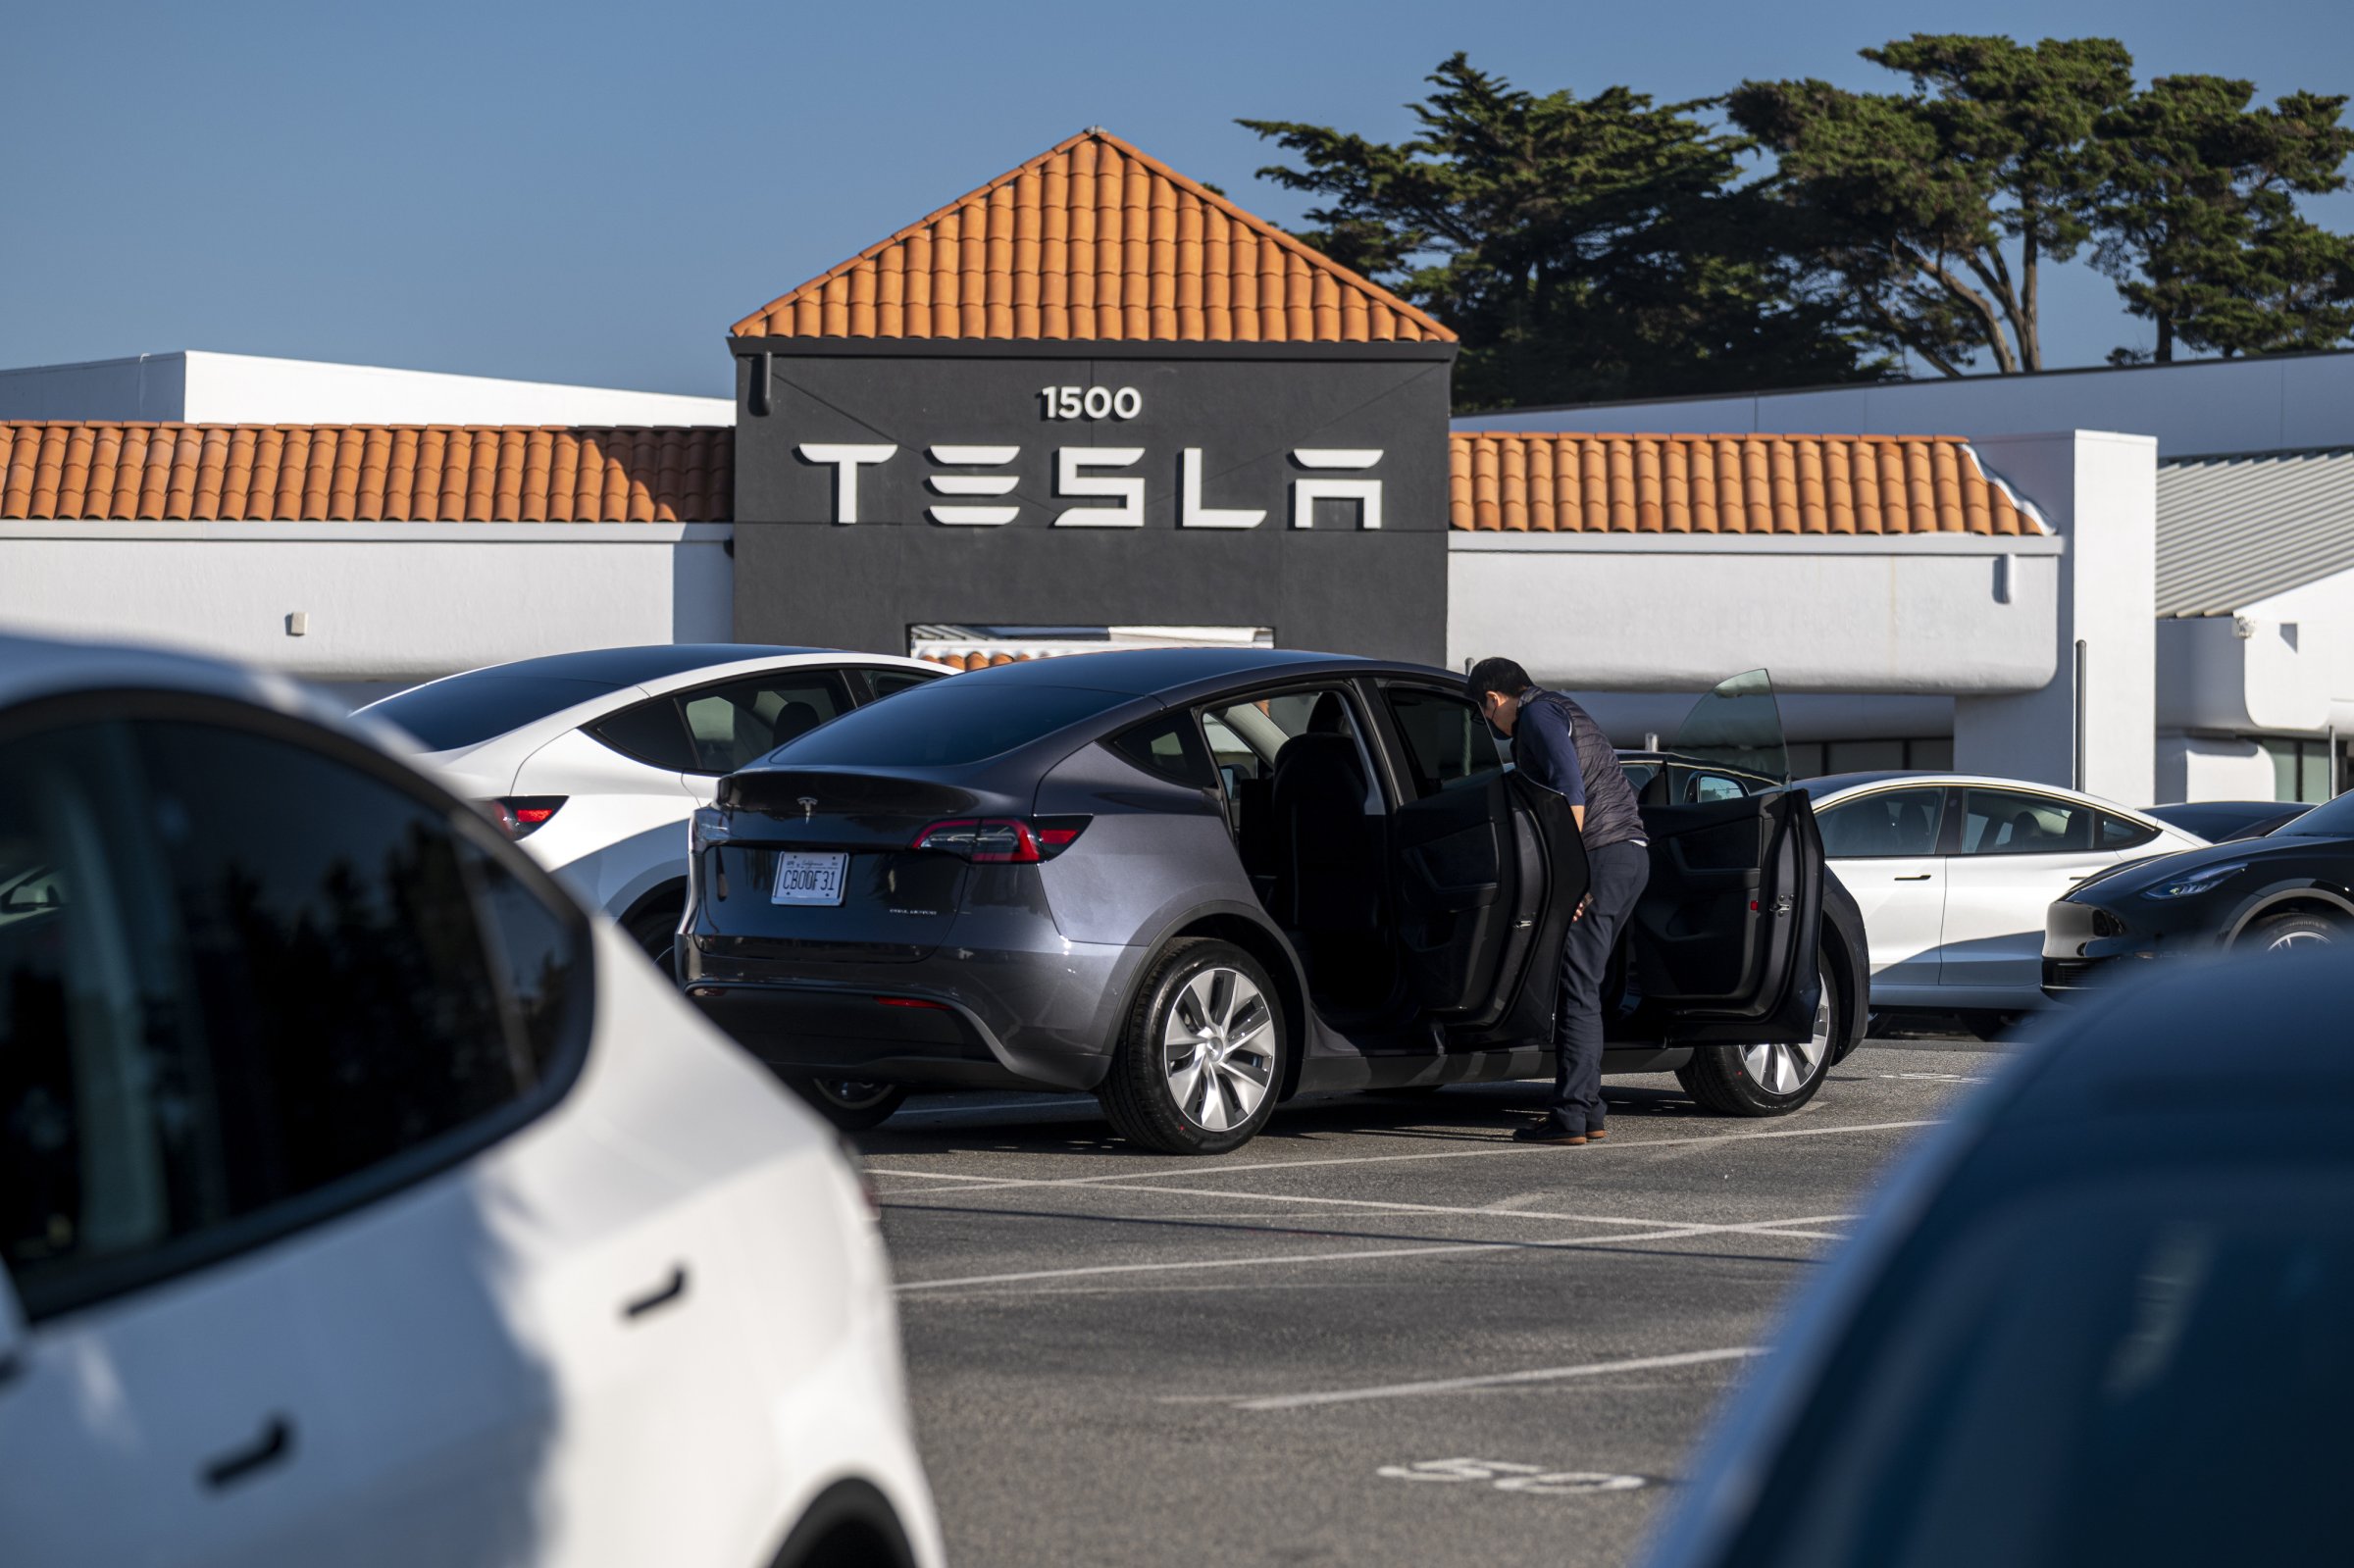 A Tesla dealership in Colma, Calif. on Jan. 26, 2022.